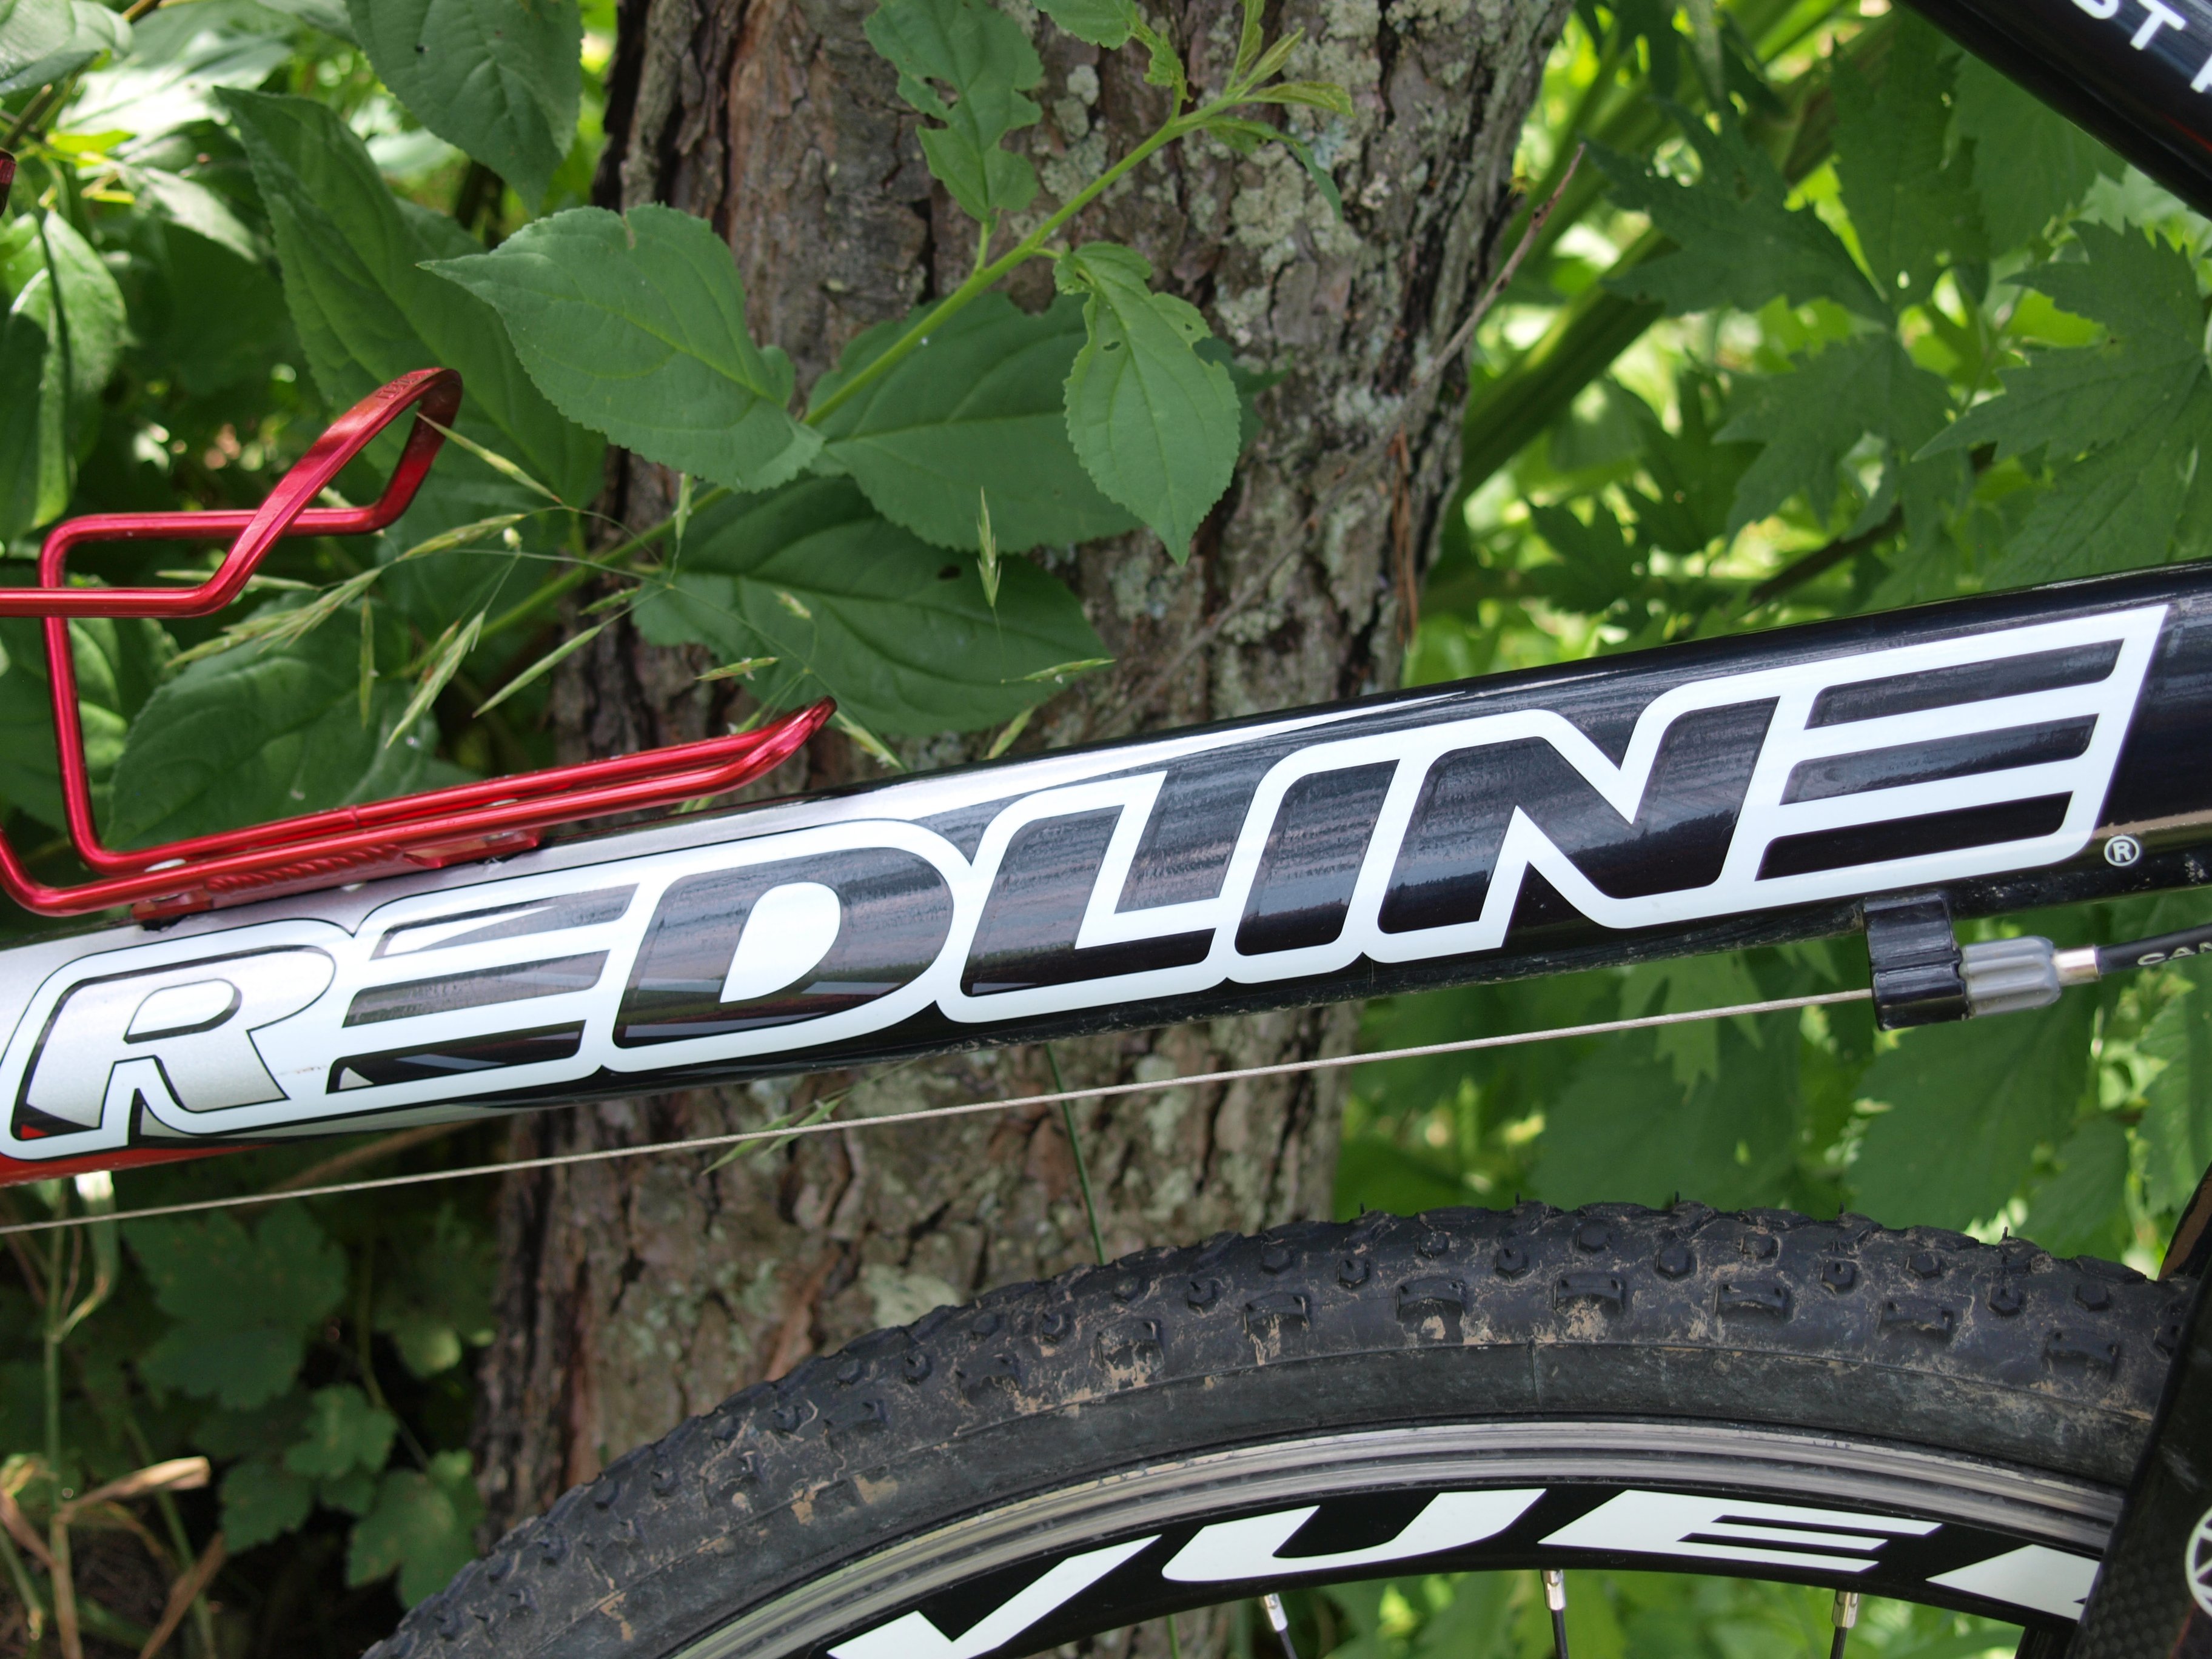 redline, Bicycle, Bike Wallpaper